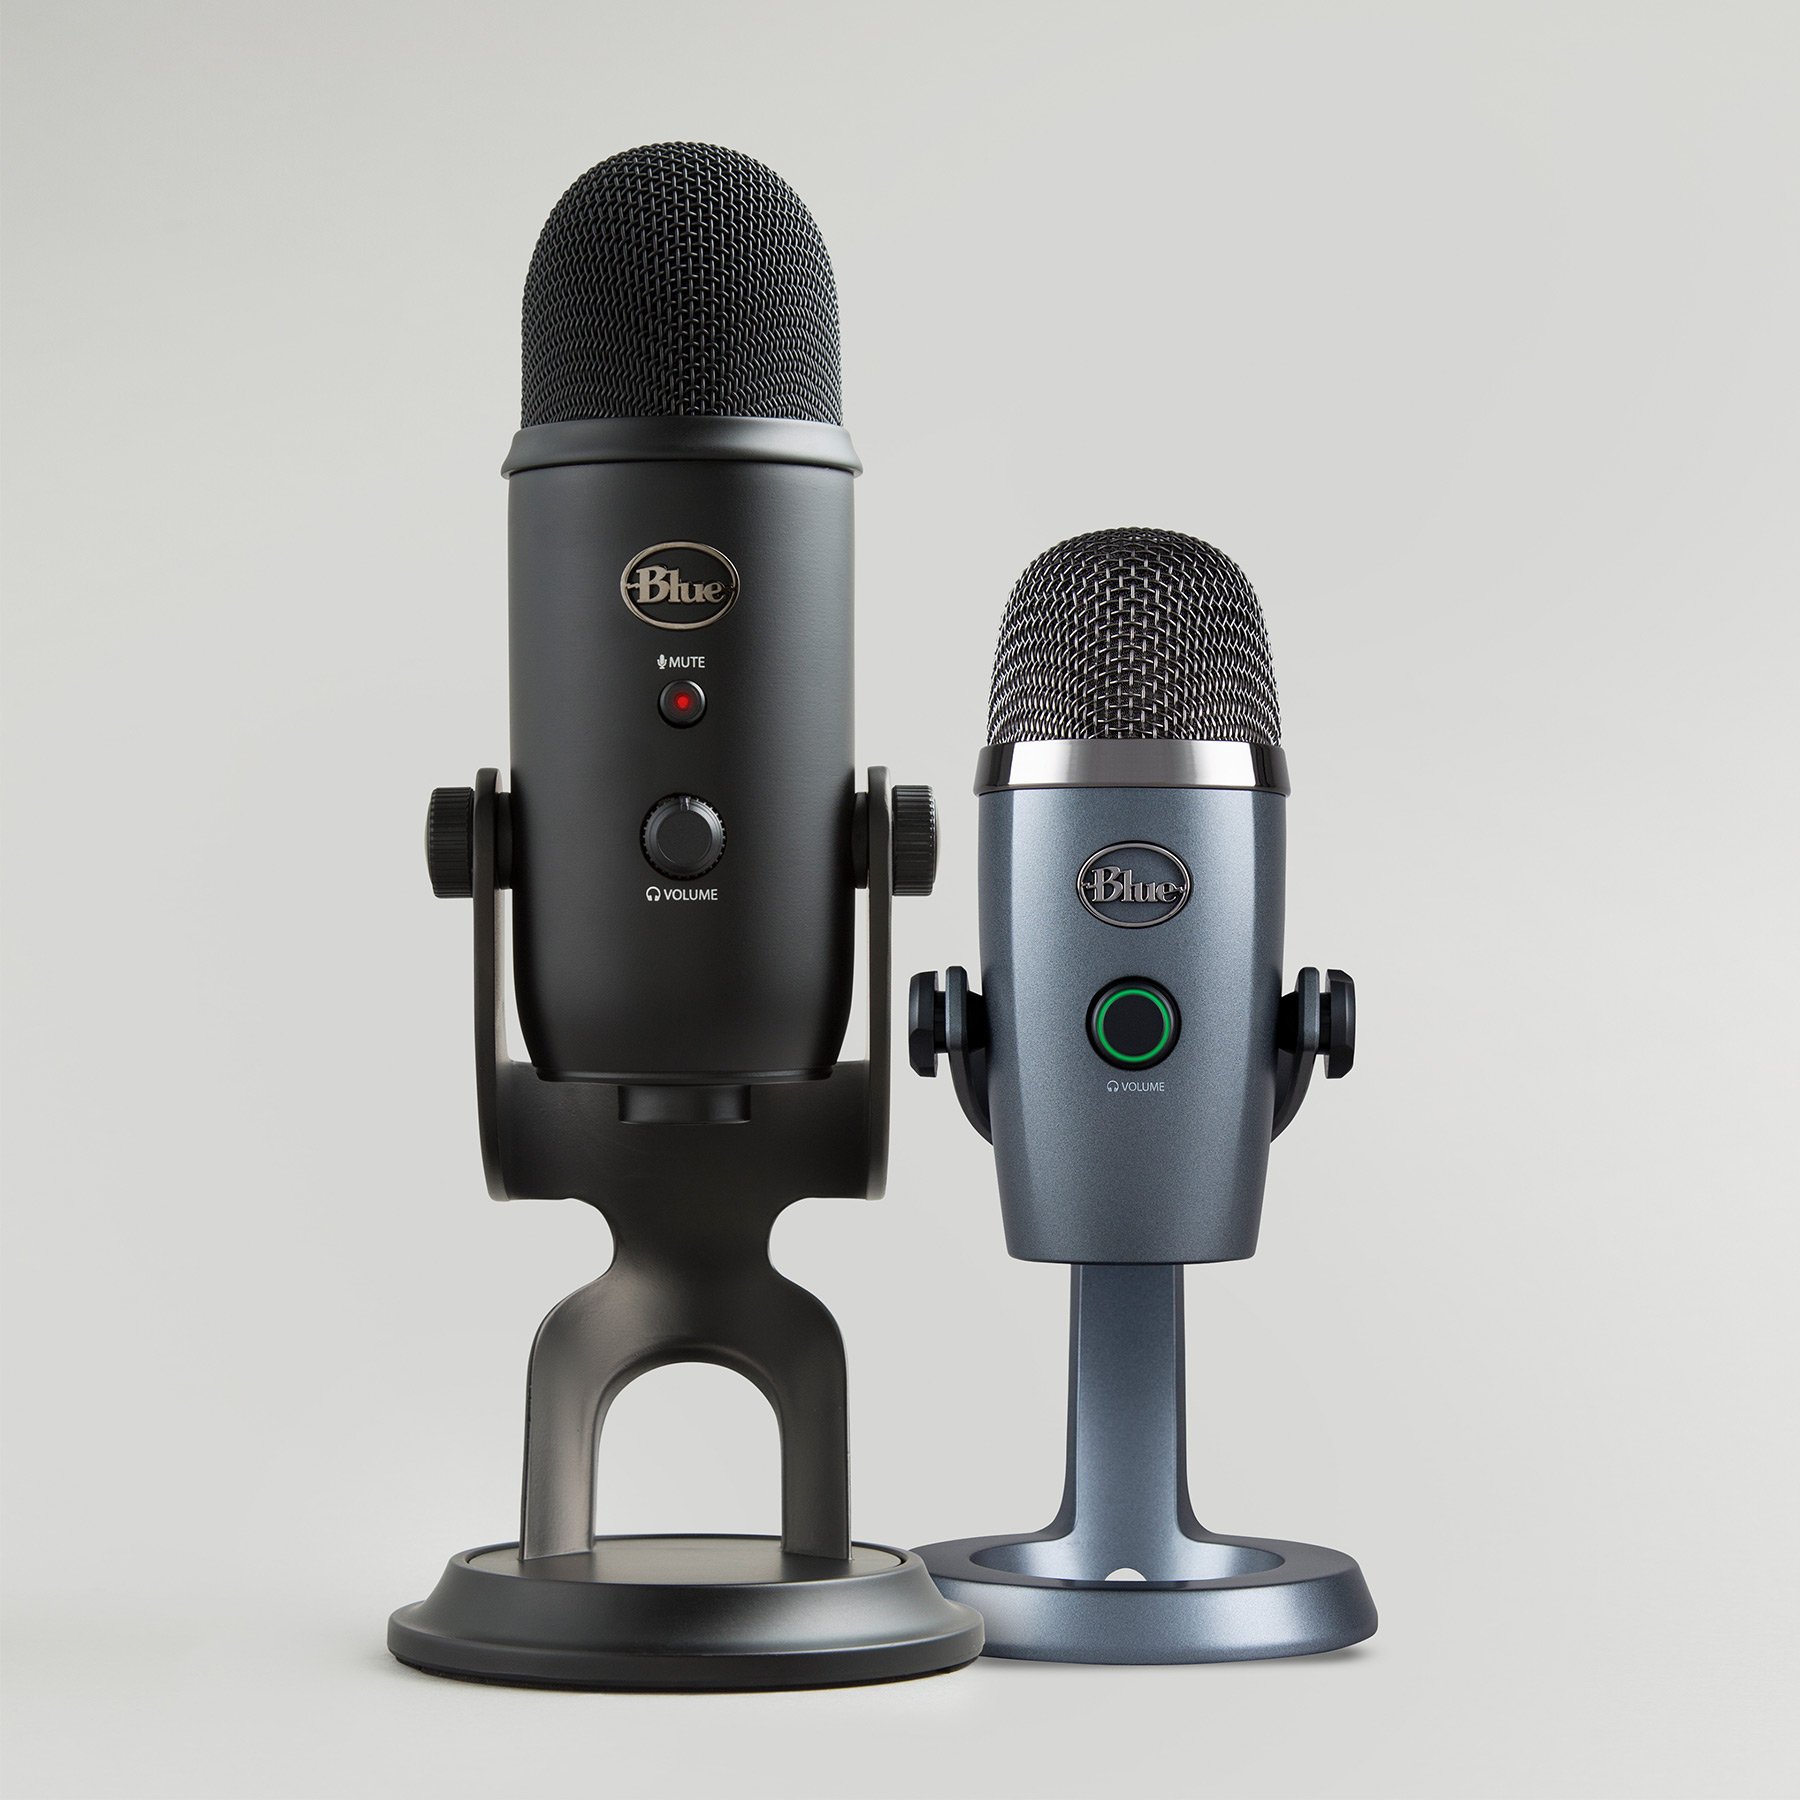 Blue YETI-NANO USB Microphone for Recording & Streaming